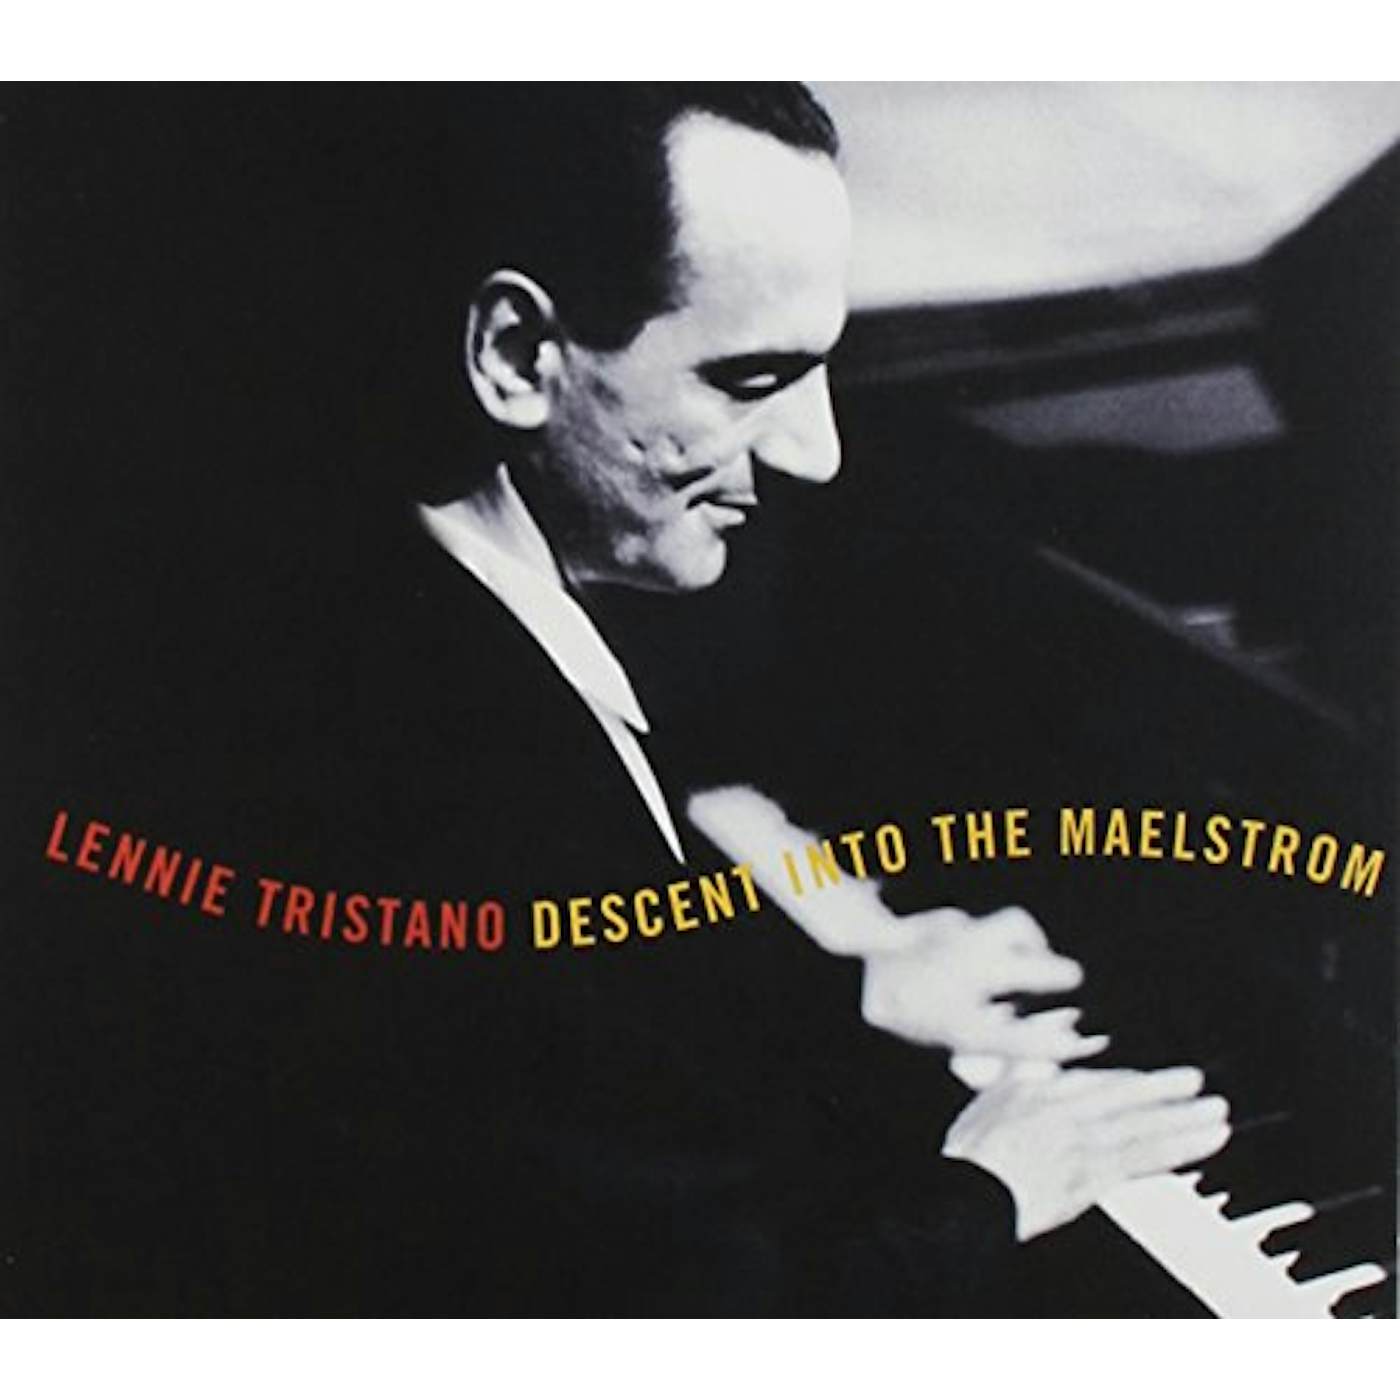 Lennie Tristano DESCENT INTO THE MAELSTROM CD